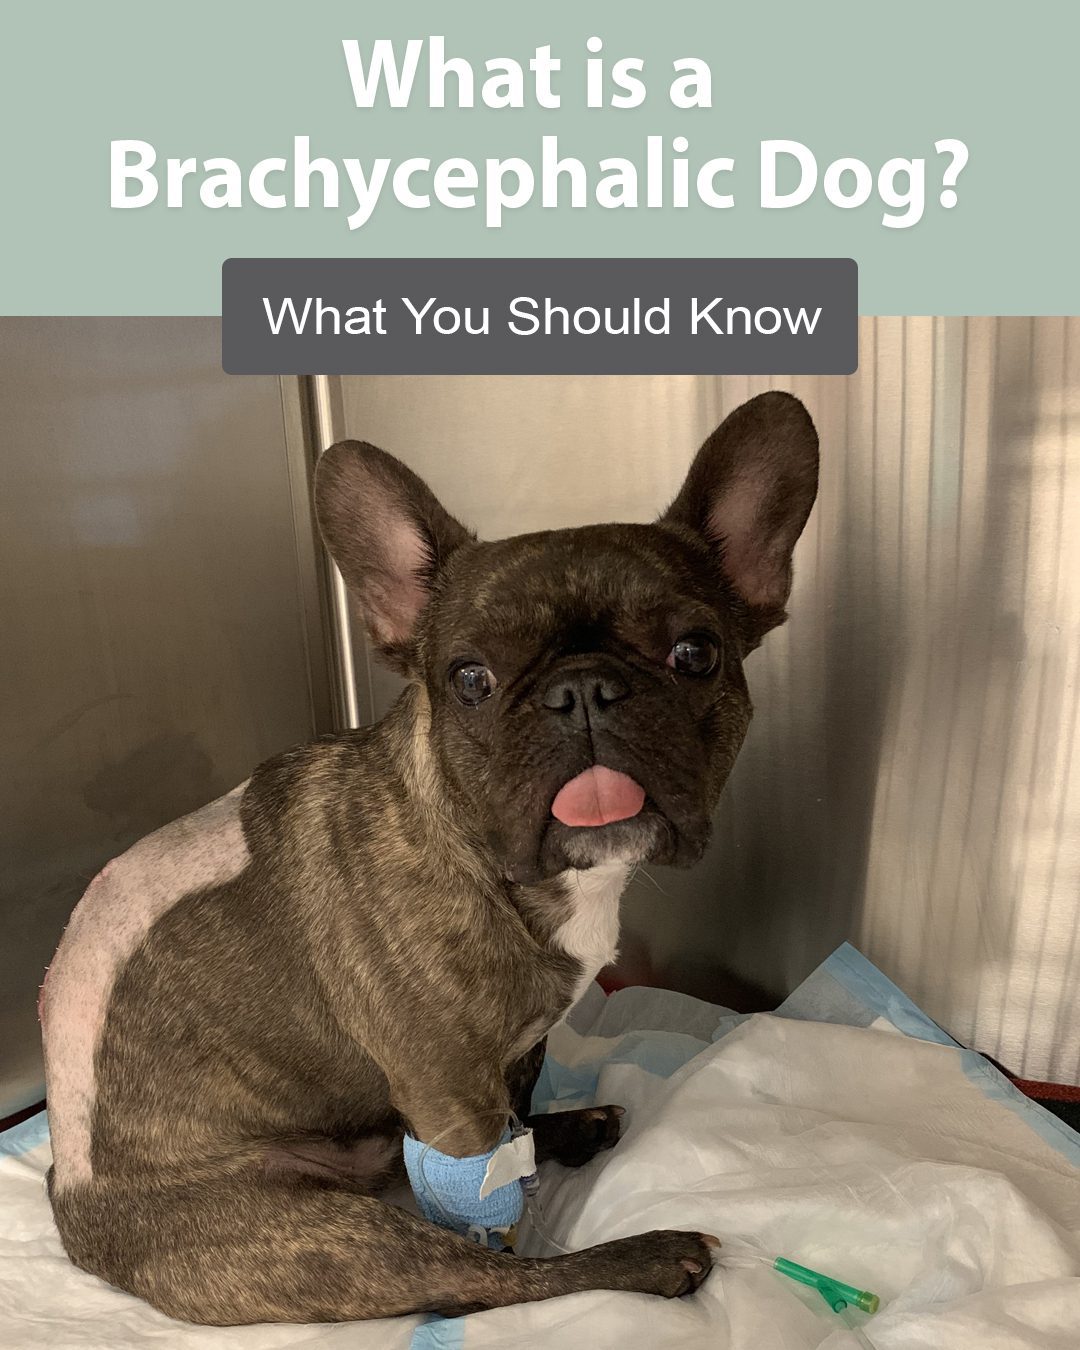 What Is a Brachycephalic Dog?